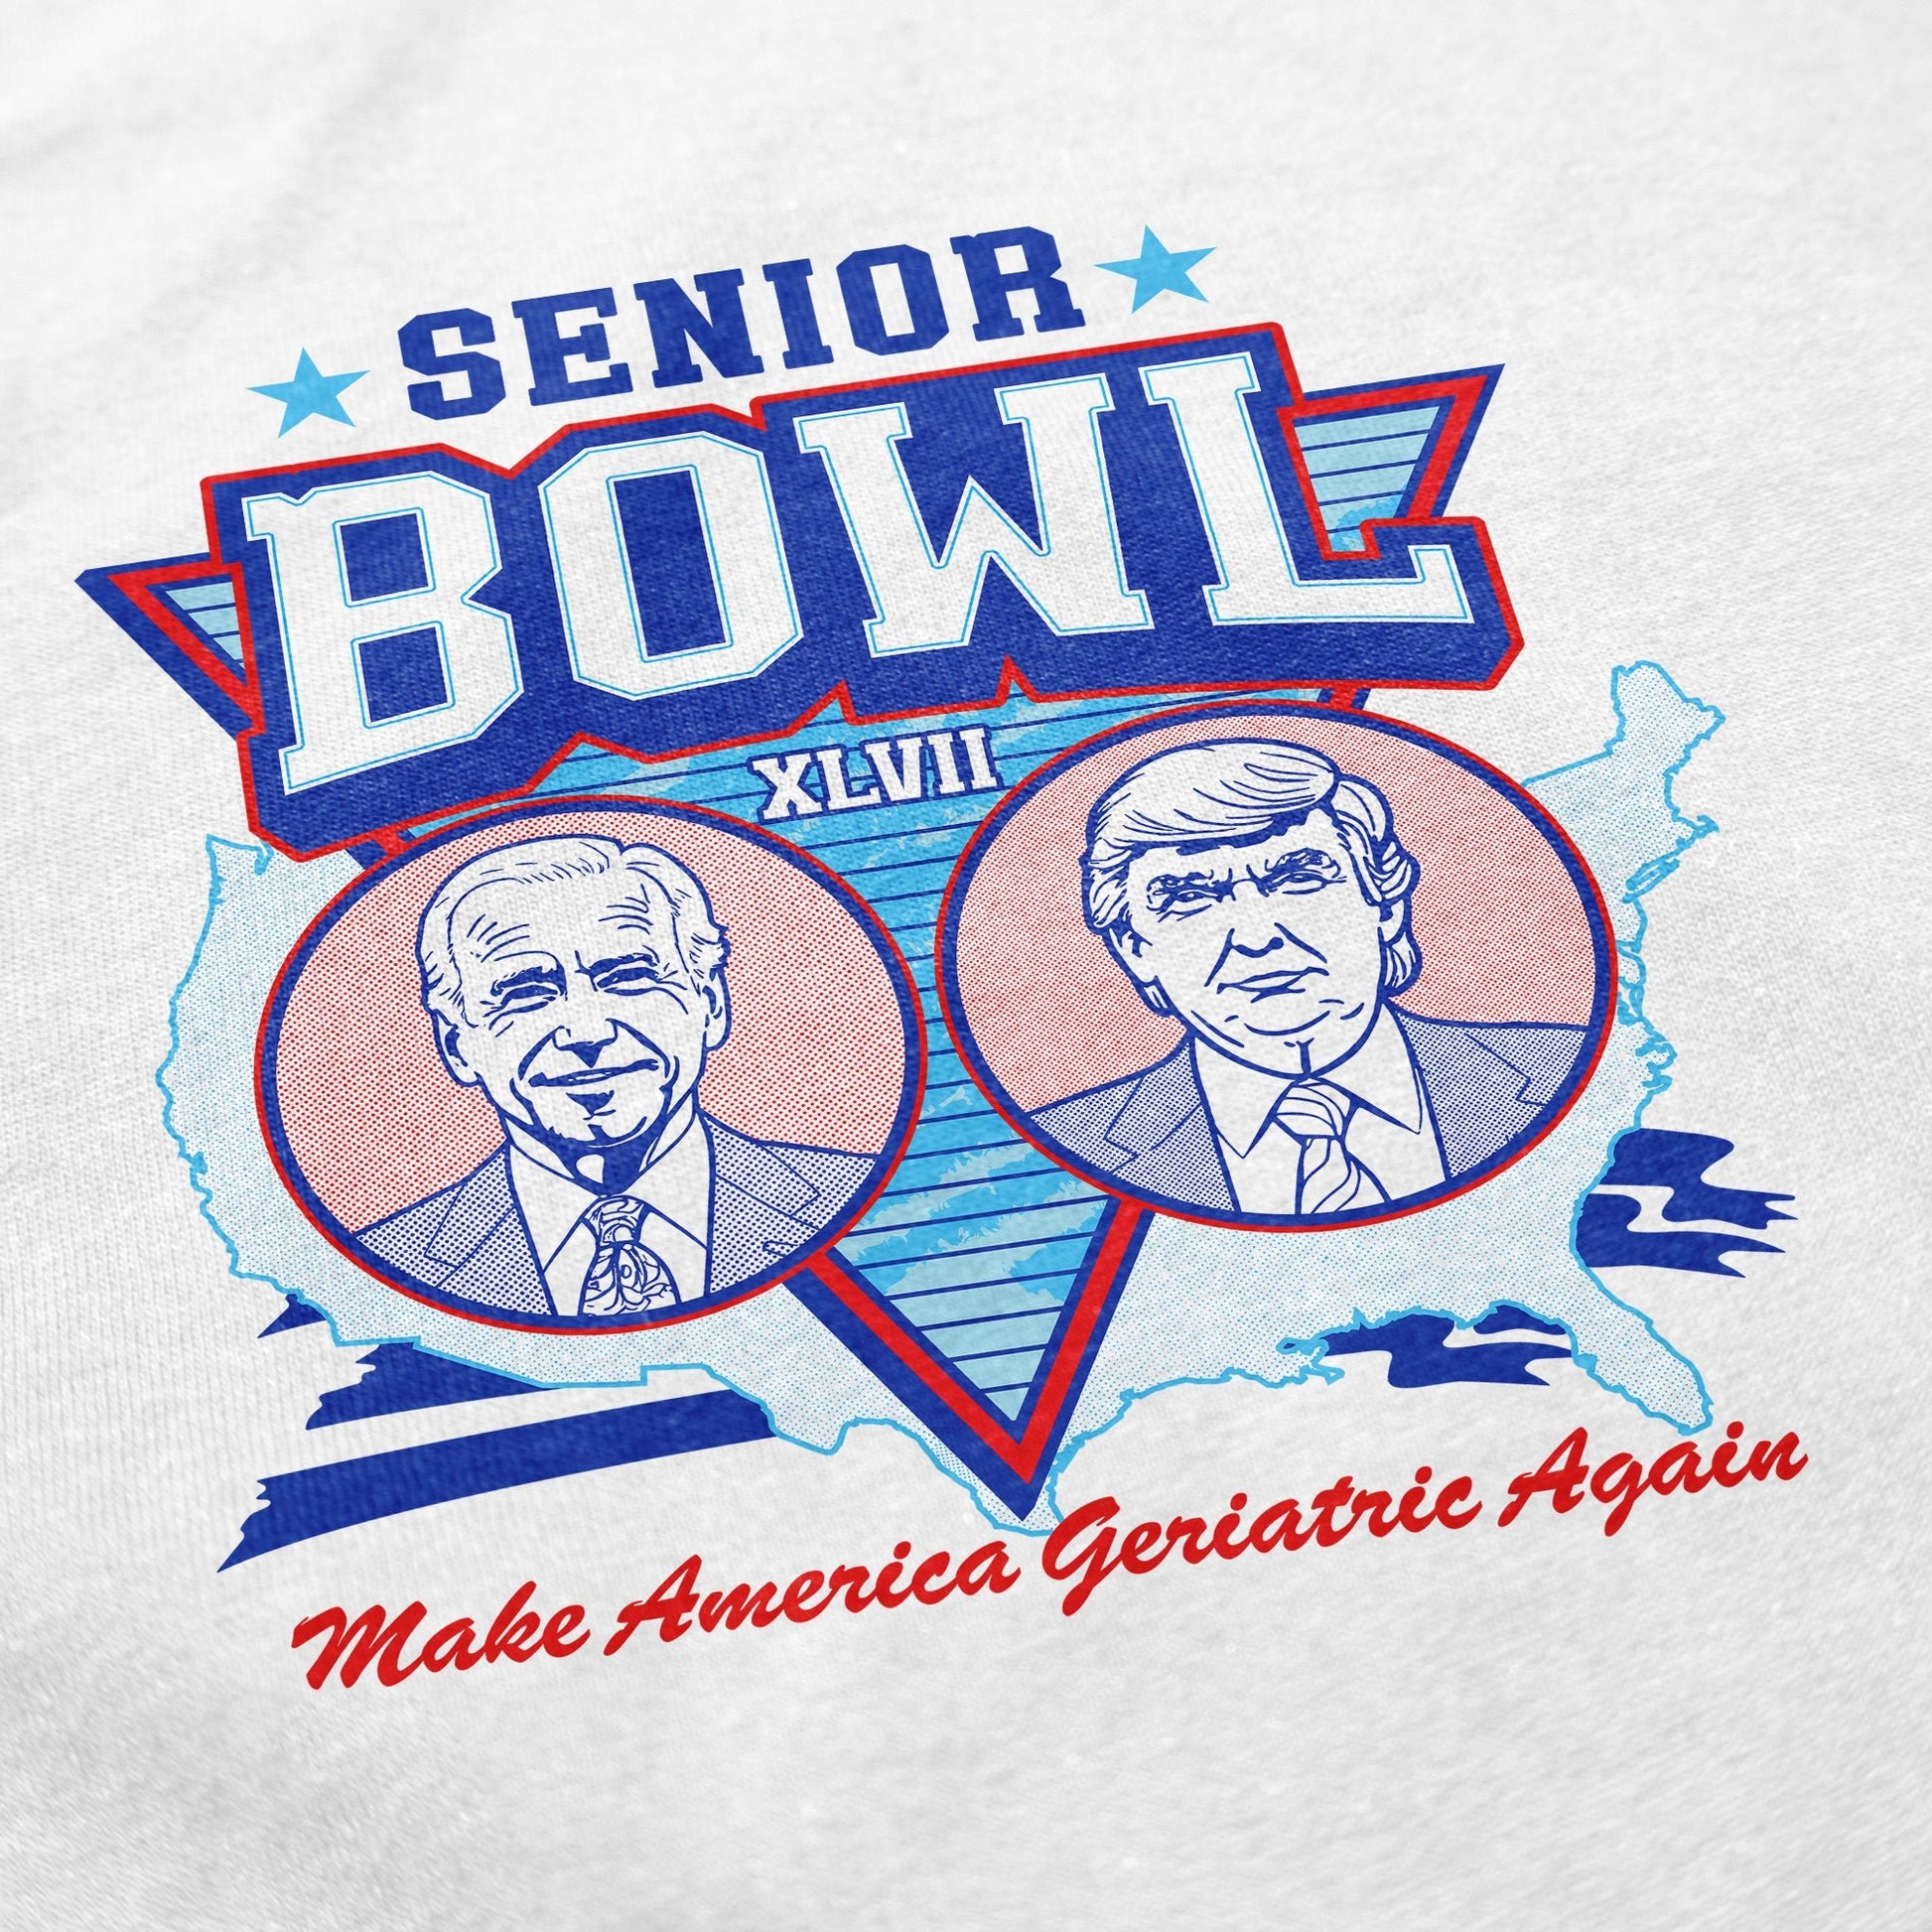 Senior Bowl T Shirt - Shitheadsteve